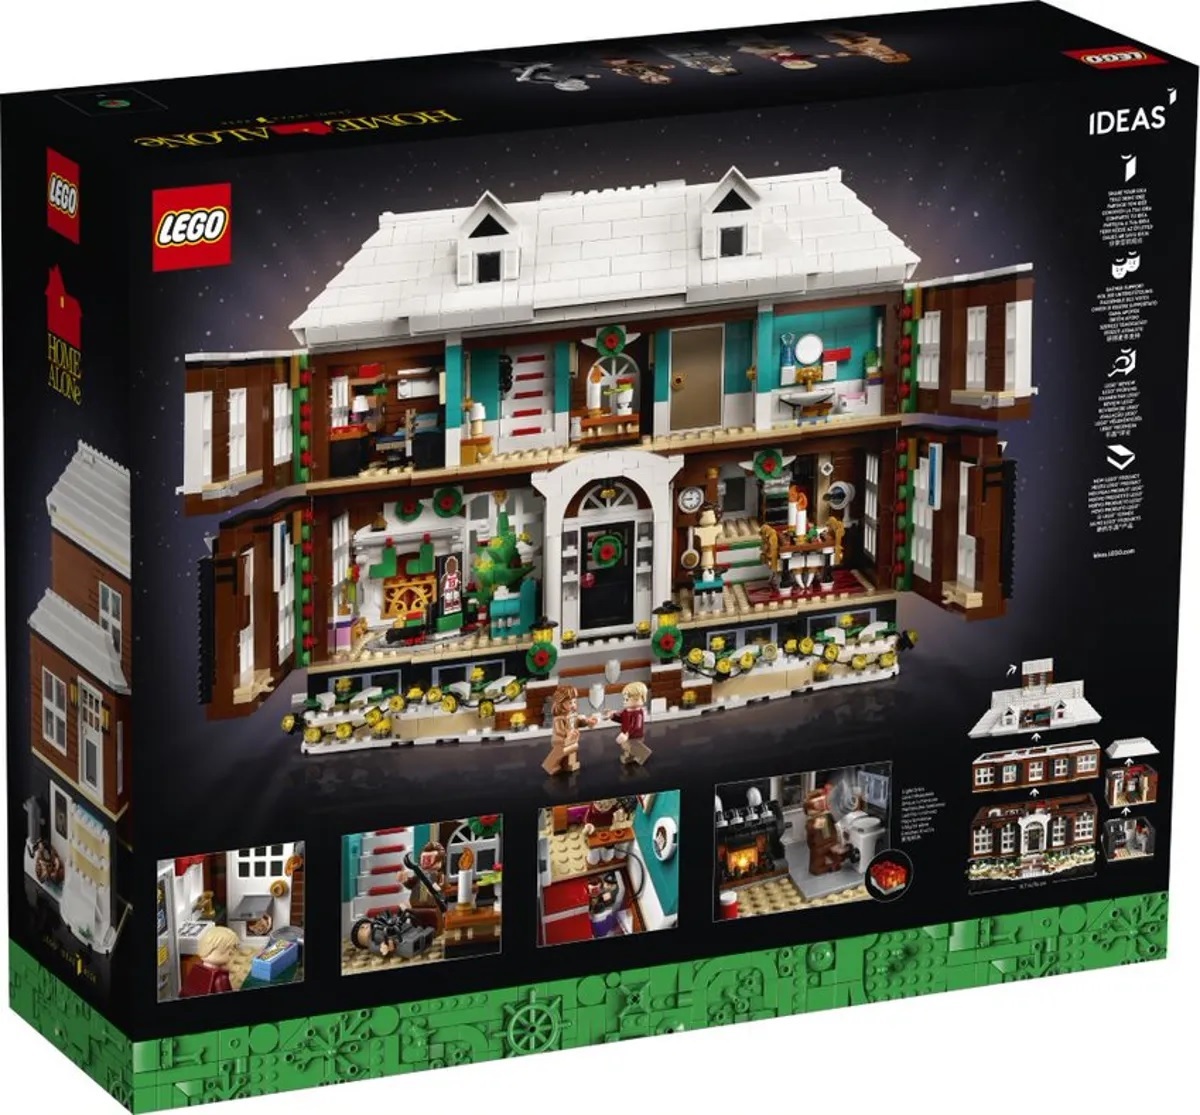 (Lego.Ideas.21330) LEGO Ideas - Home Alone (box back) (zoom)